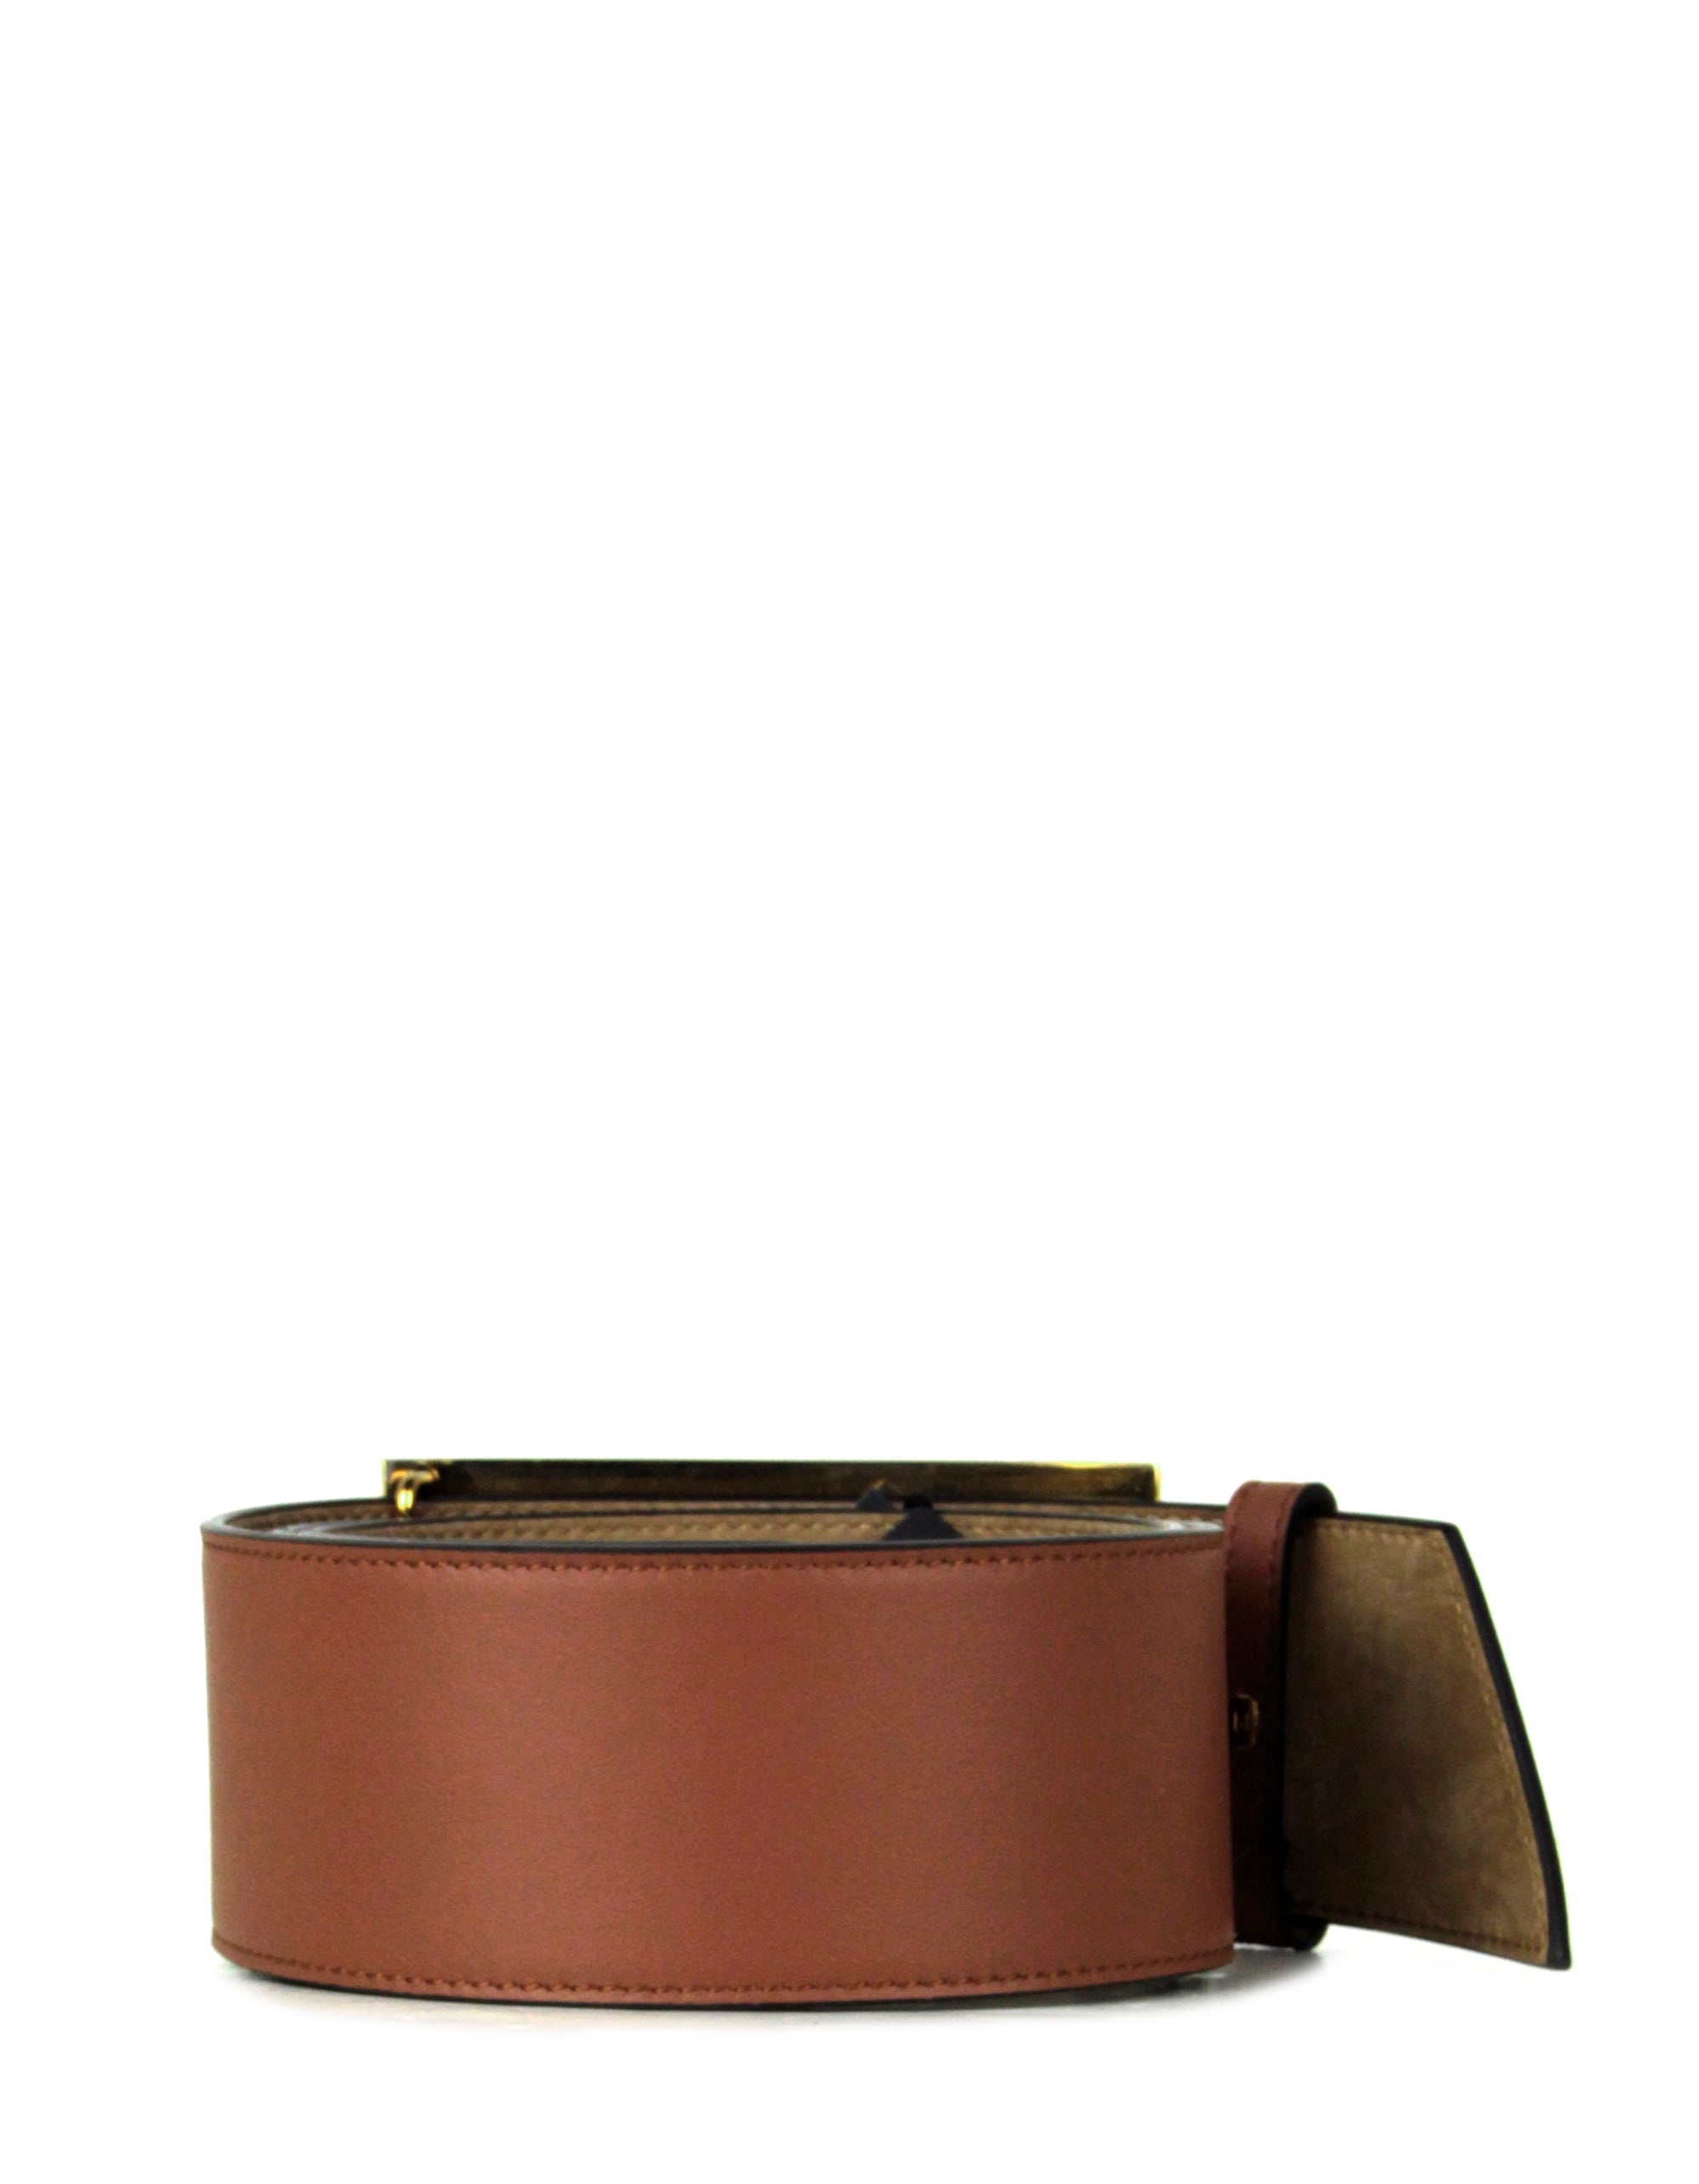 Fendi NWT Brown Leather Wide Logo Belt sz 85/34